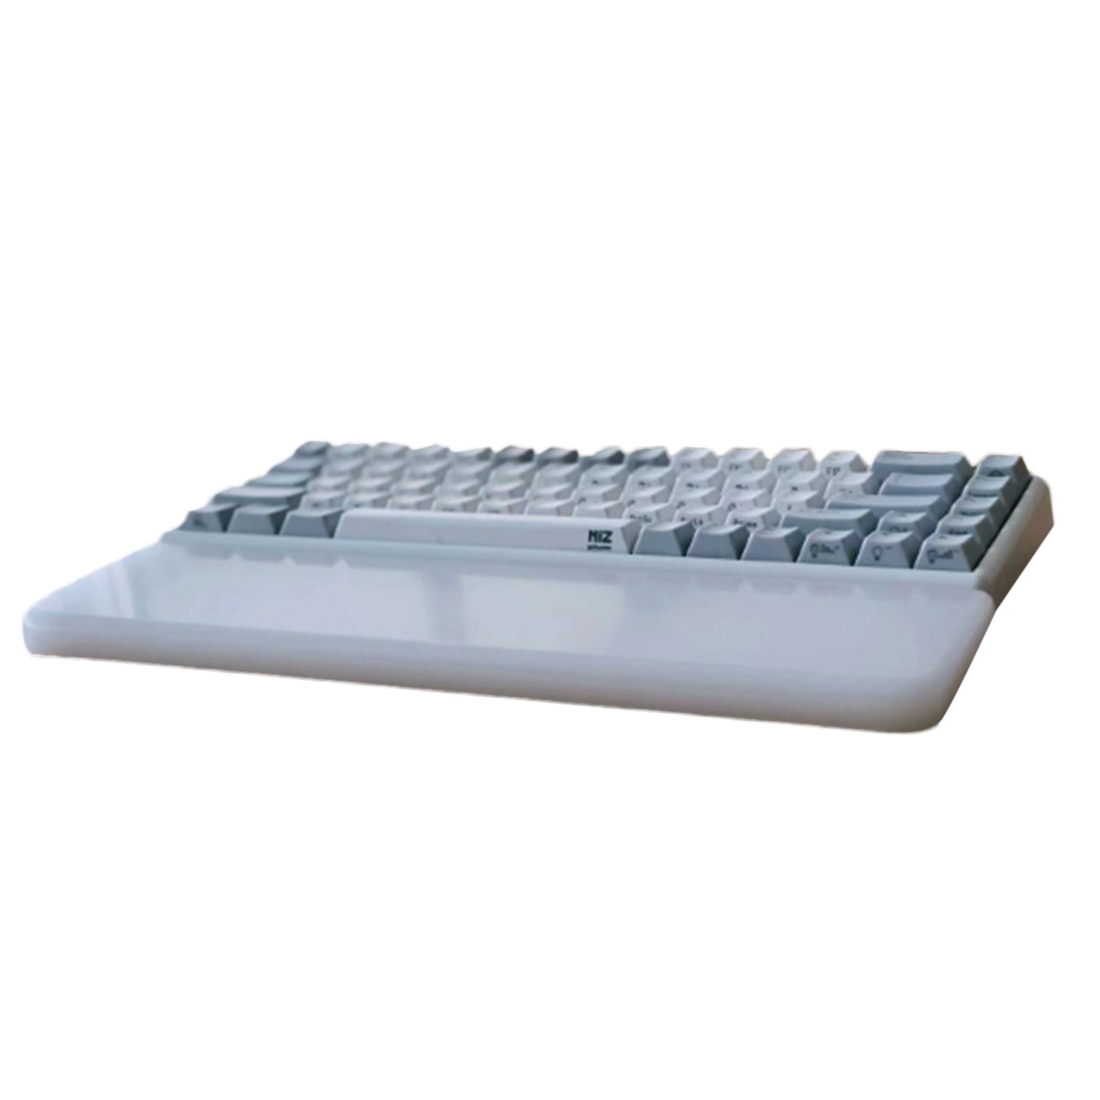 Hars Toetsenbord Polssteun Pad Pols Hand Pad Voor 61 87 104 Toetsen Mechanische Toetsenbord Voor Kantoor Gaming Pc Laptop notebook-Wit